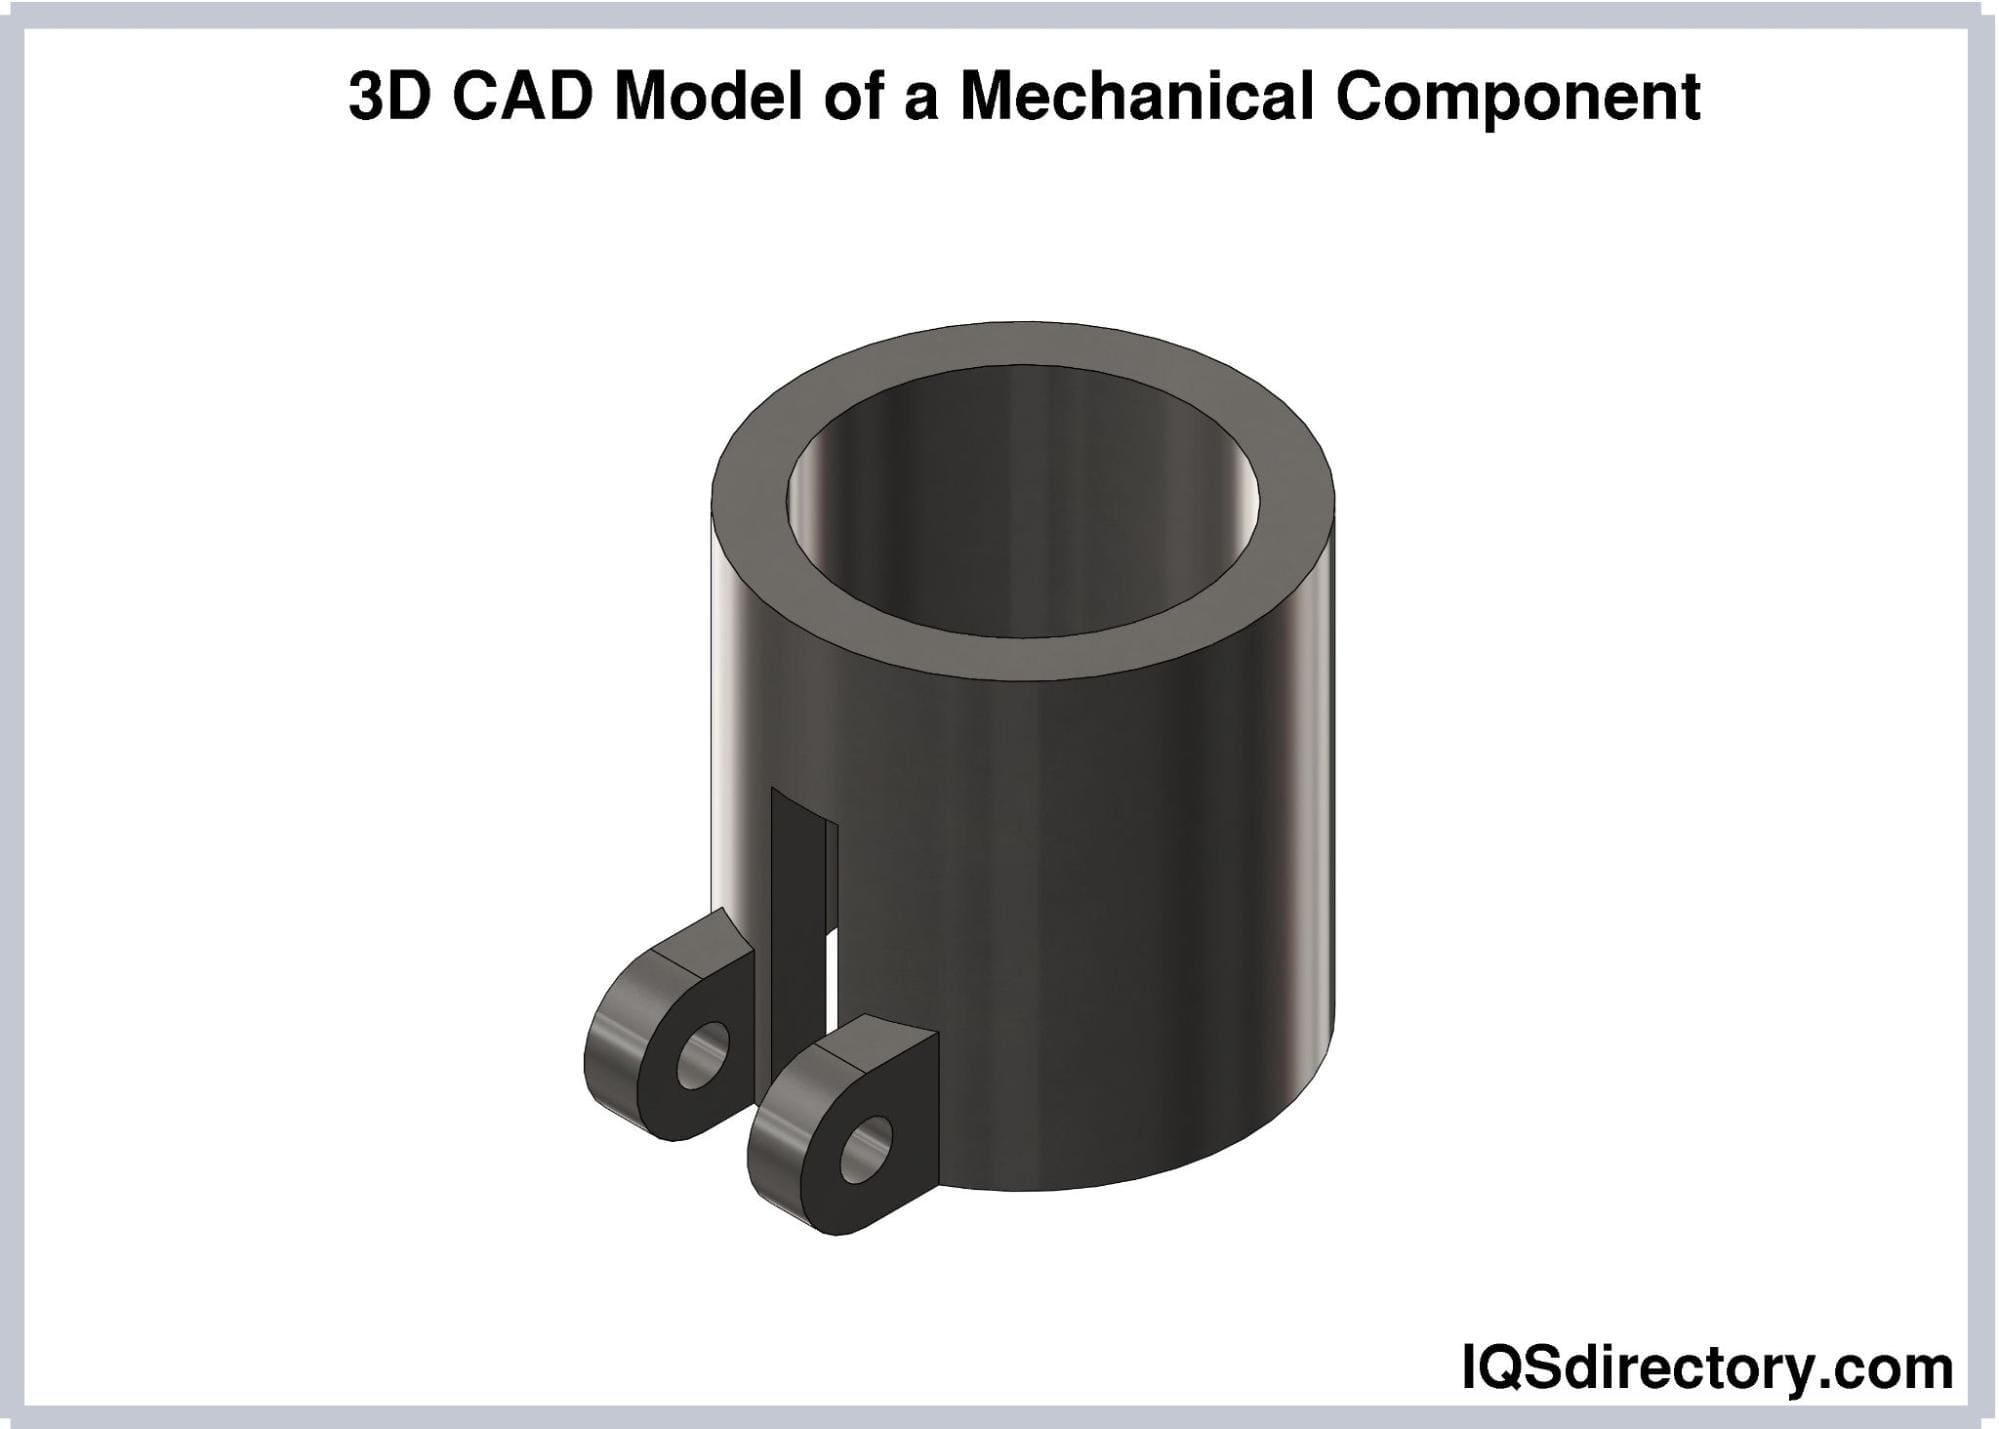 3D CAD Model of a Mechanical Component